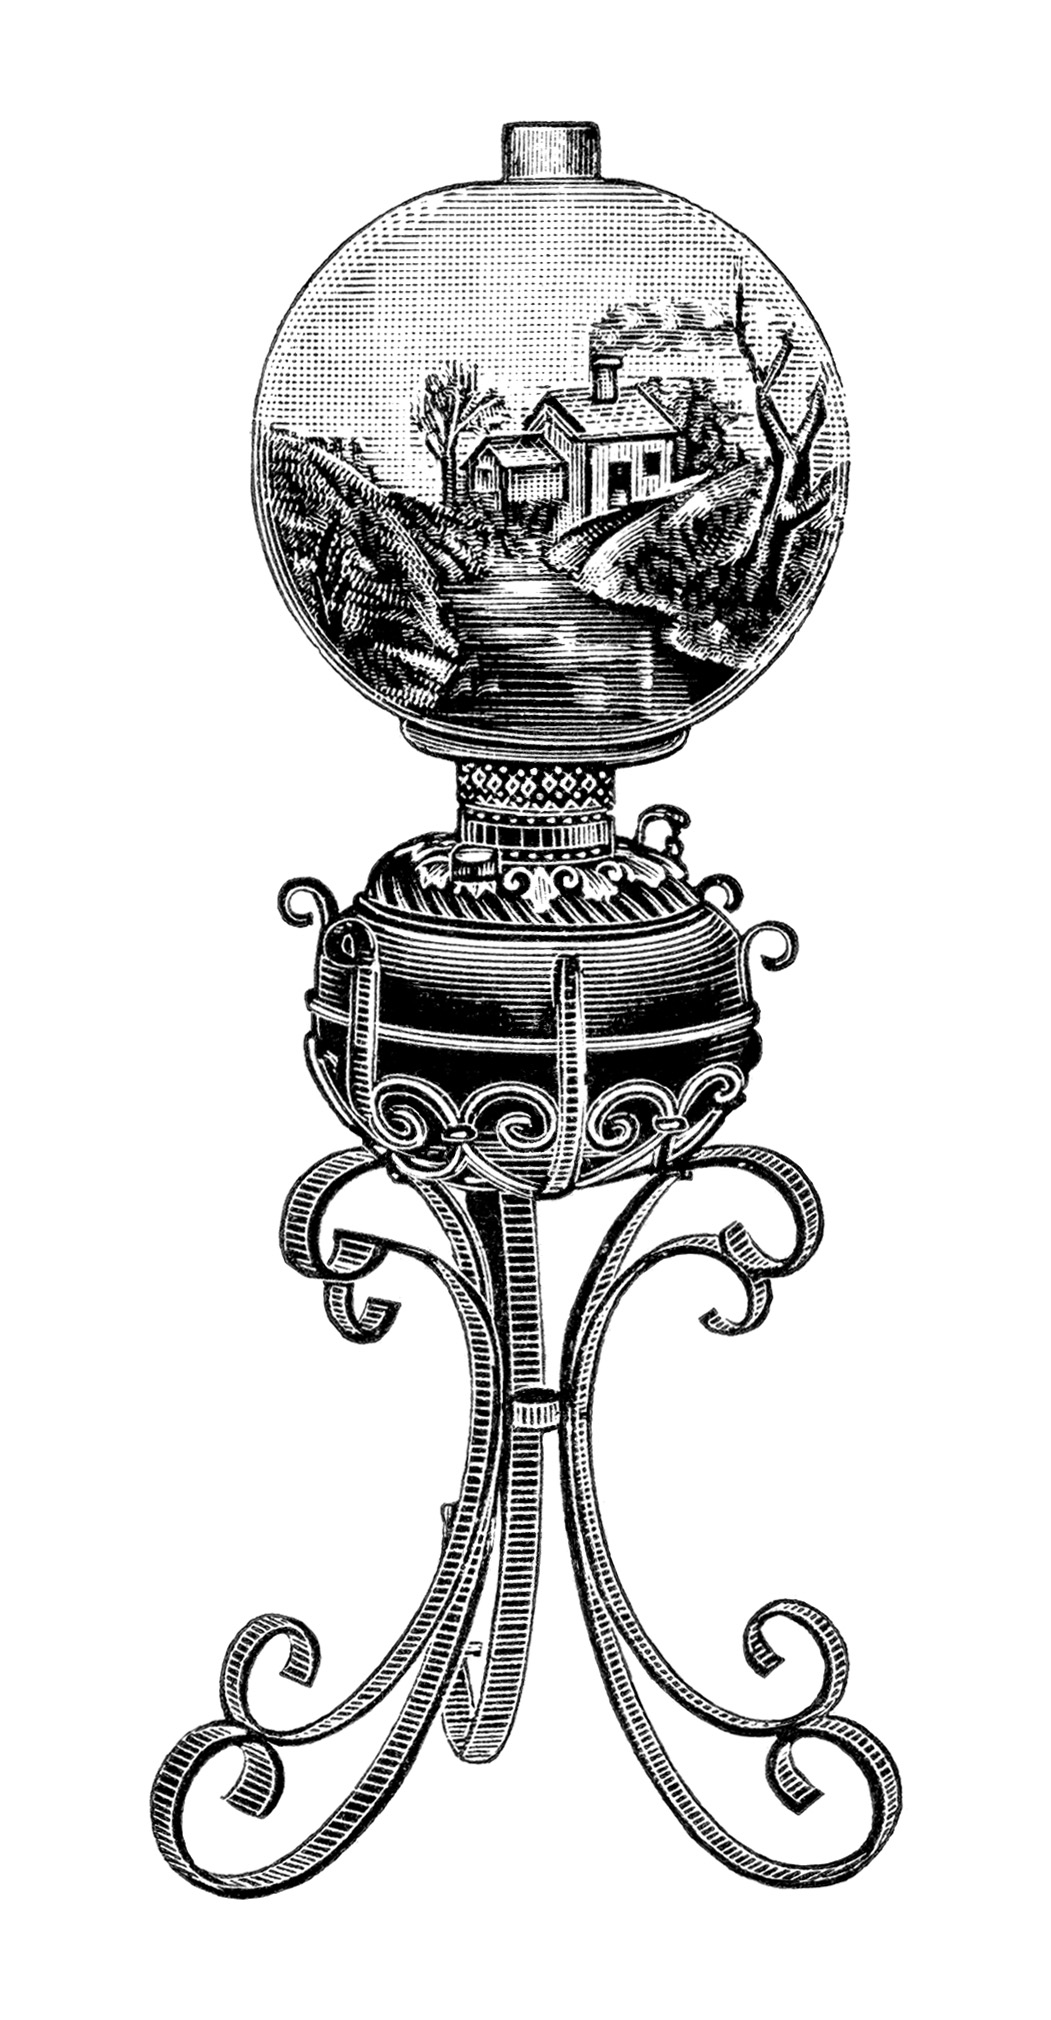 vintage lamp clipart, black and white clip art, old fashioned lamp image, elegant victorian lamp engraving, antique banquet lamp illustration